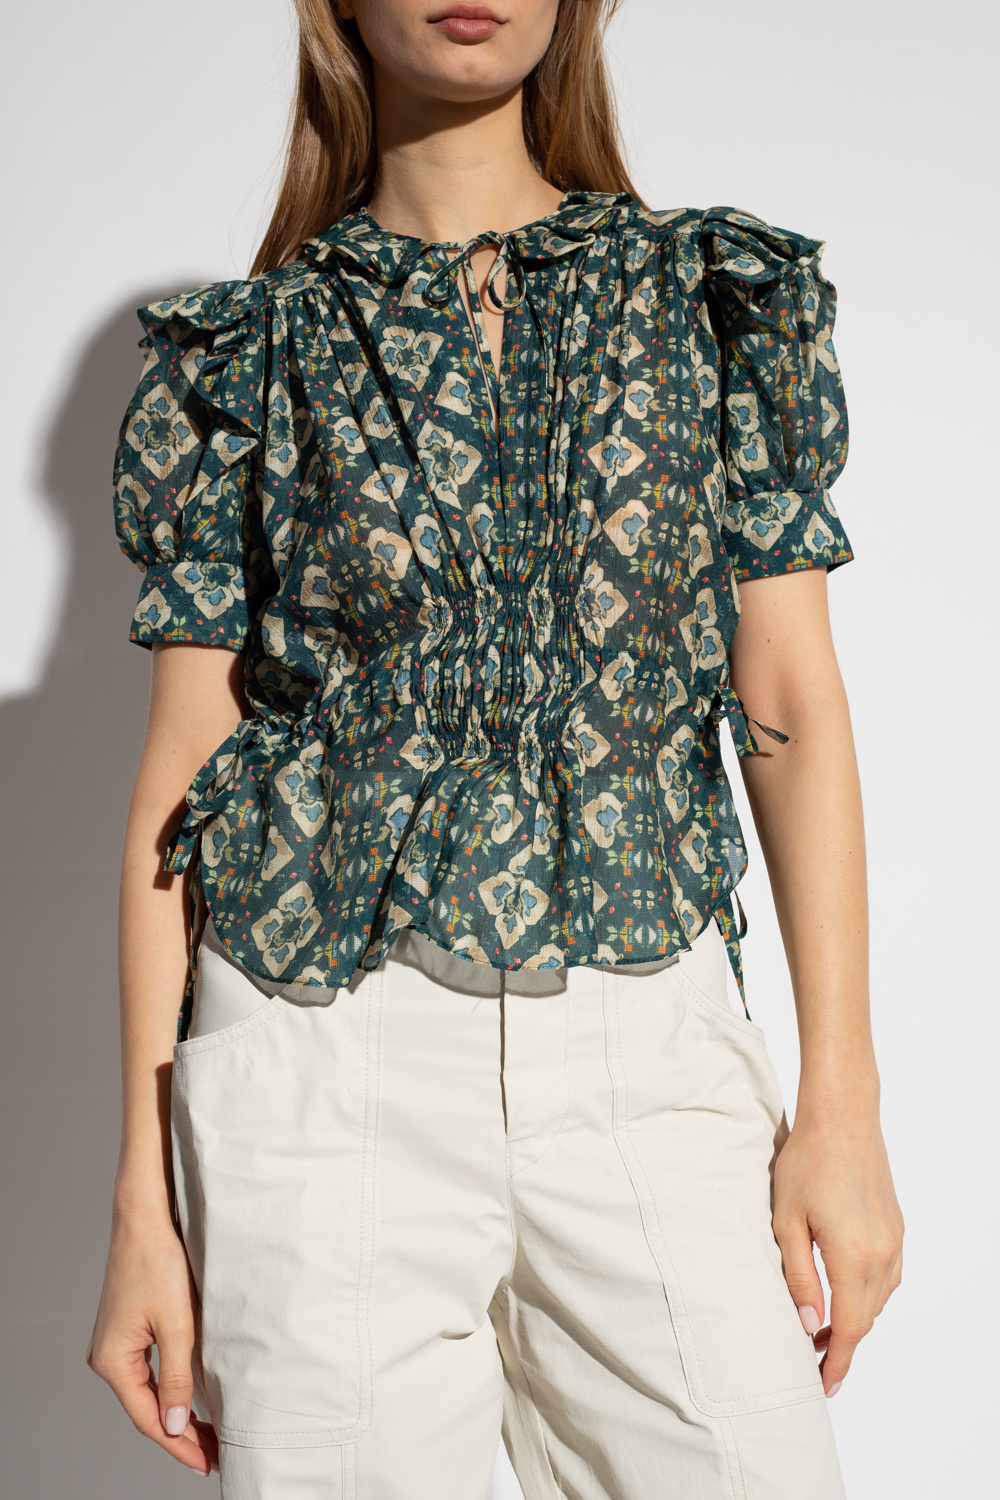 Isabel Marant ‘Annaelle’ patterned top